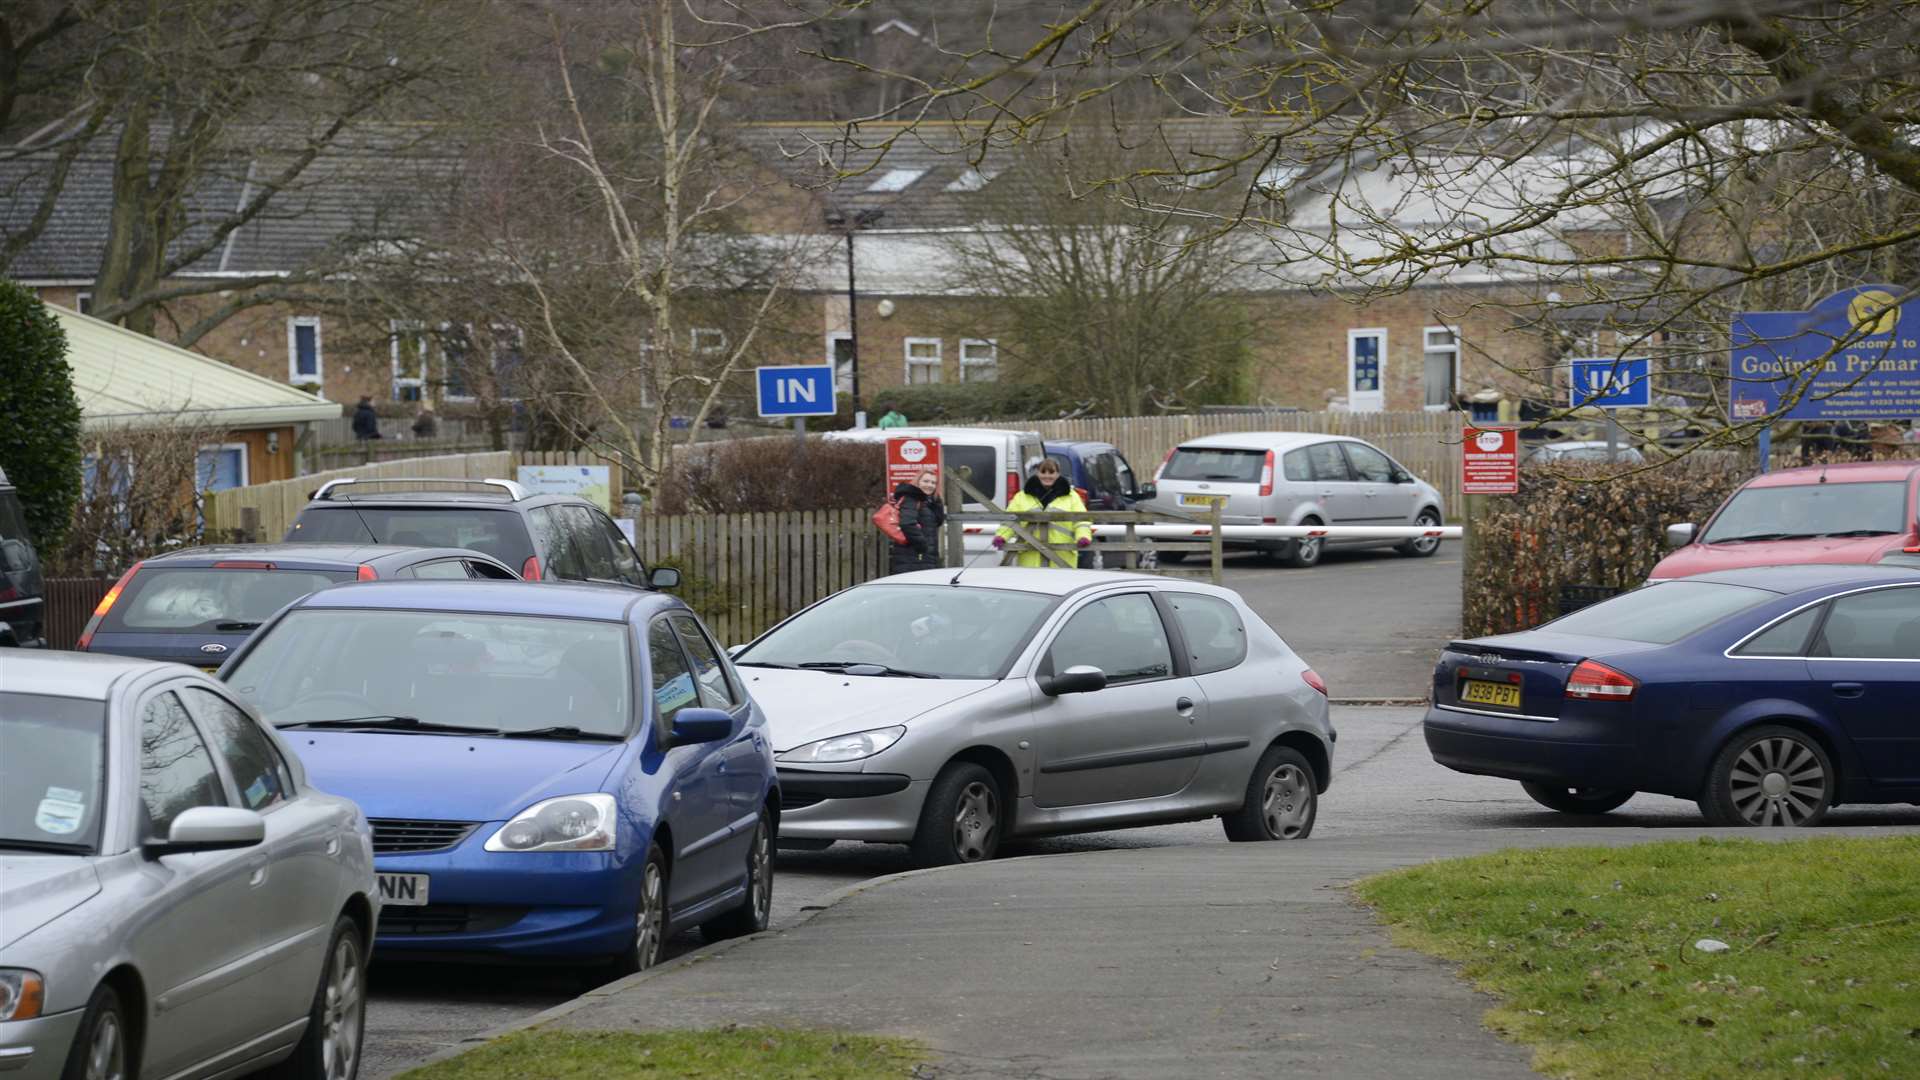 The incident happened in Lockholt Close near Godinton Primary School